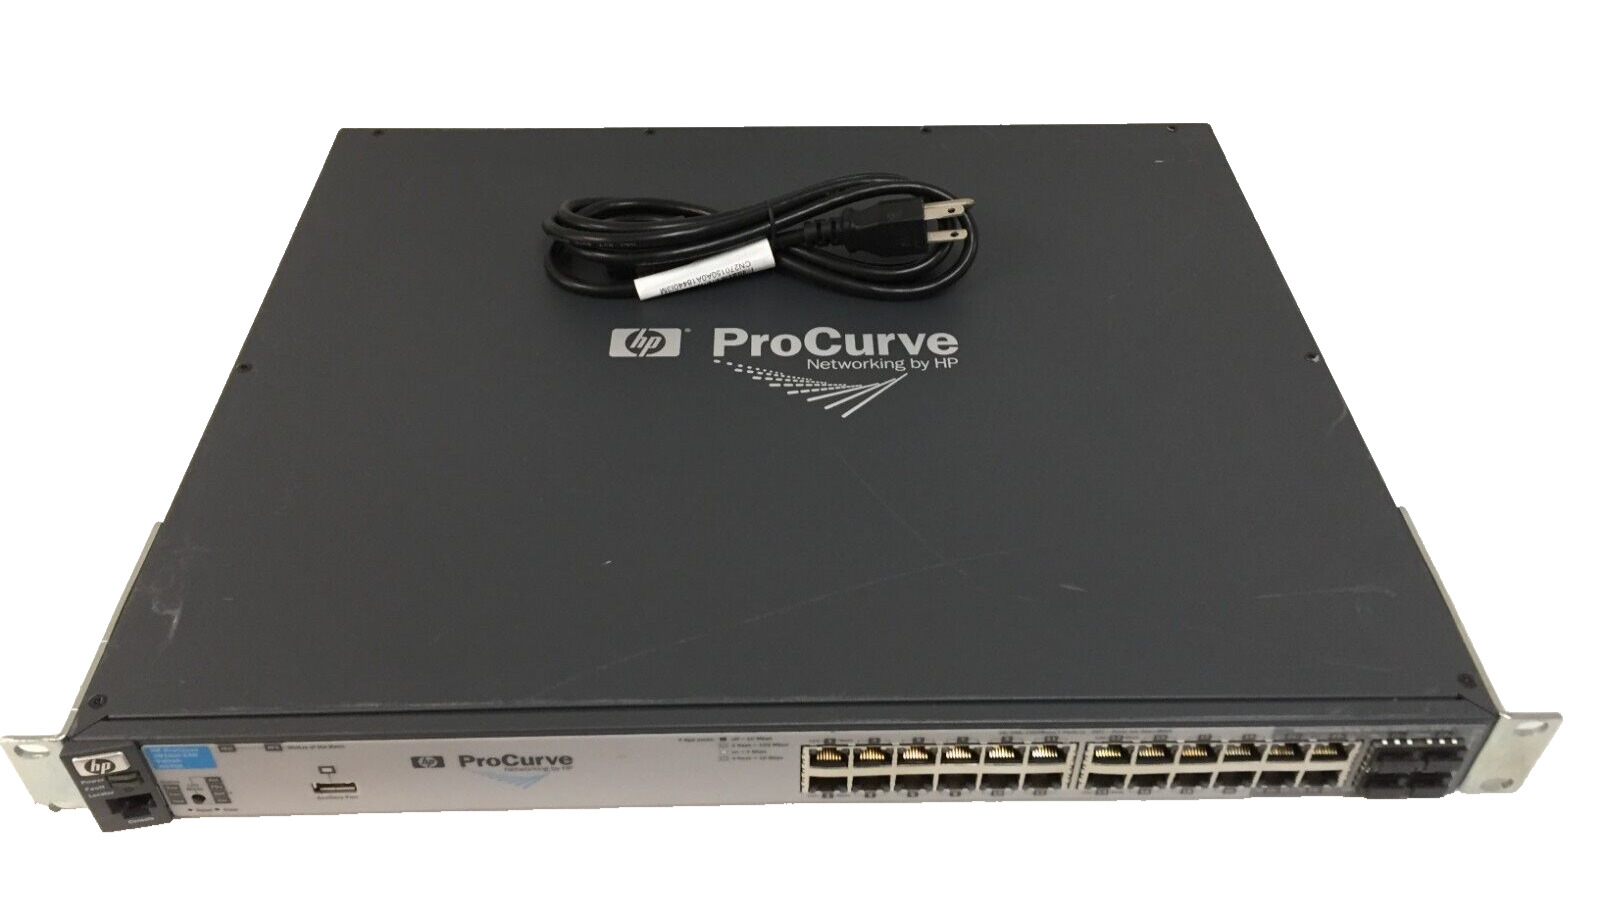 HP ProCurve 2910al-24G J9145A 24 Port 4 Port SFP Gigabit Ethernet Switch